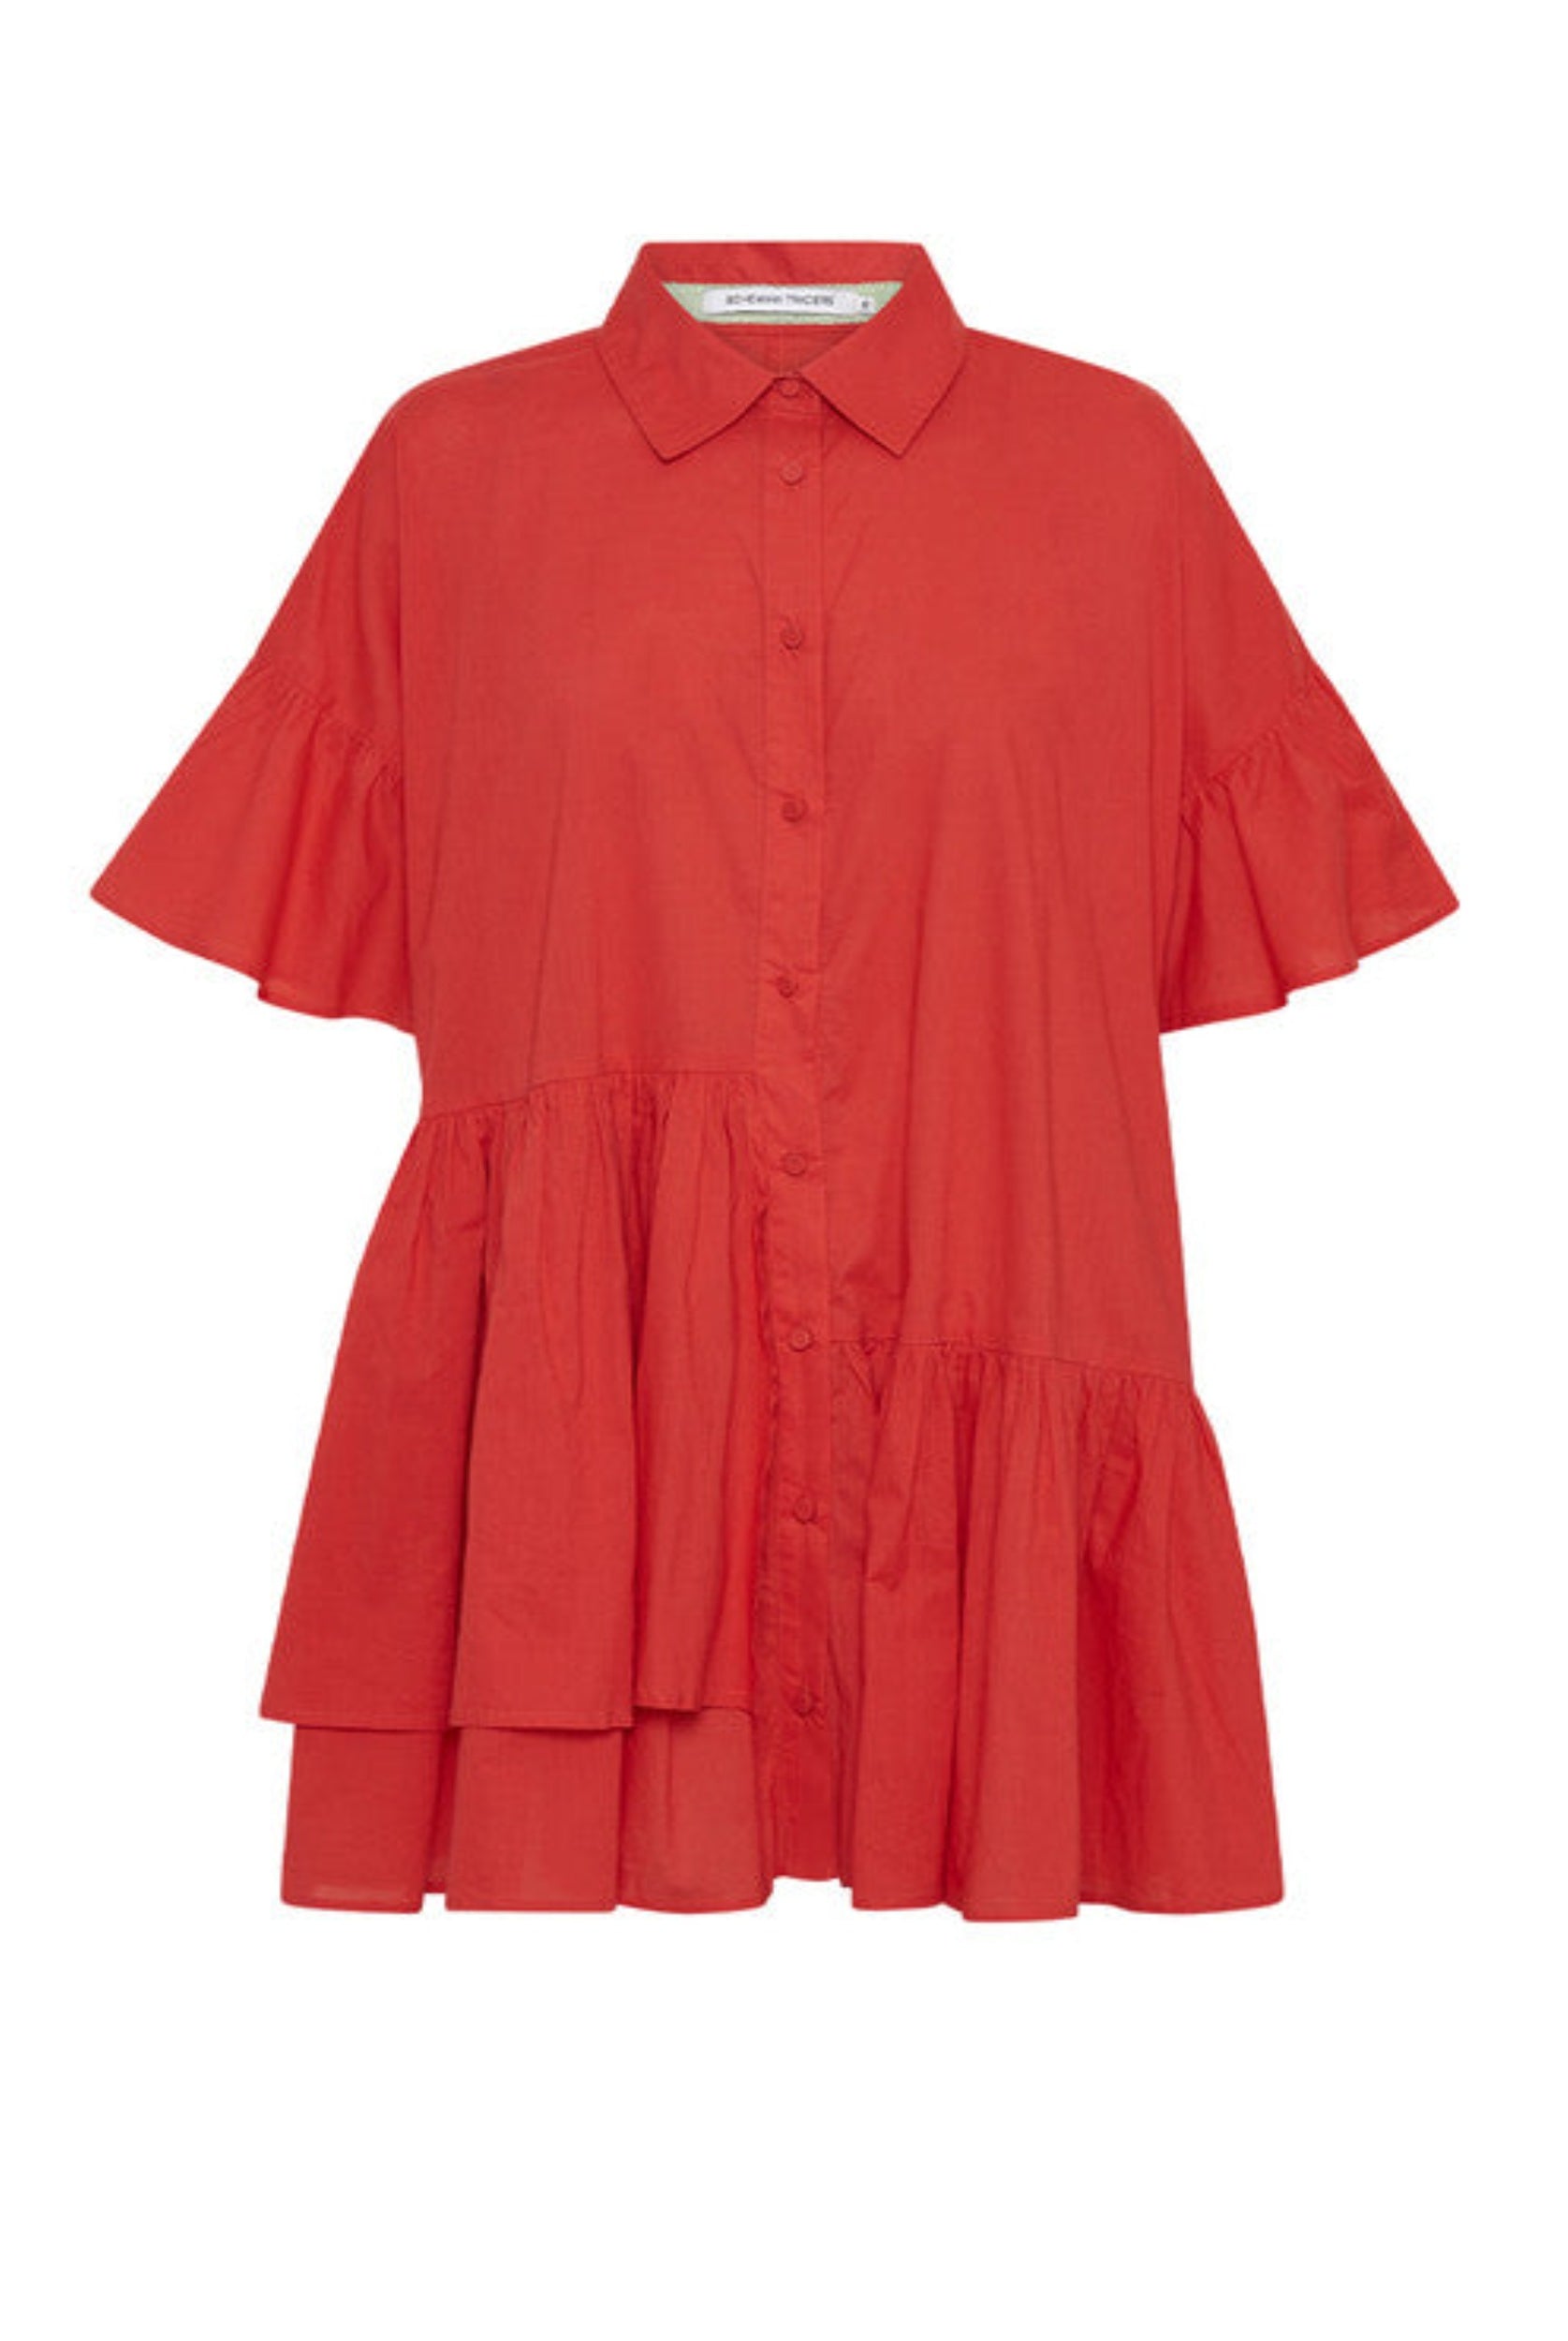 The Genoa Dress in Rhubarb Red